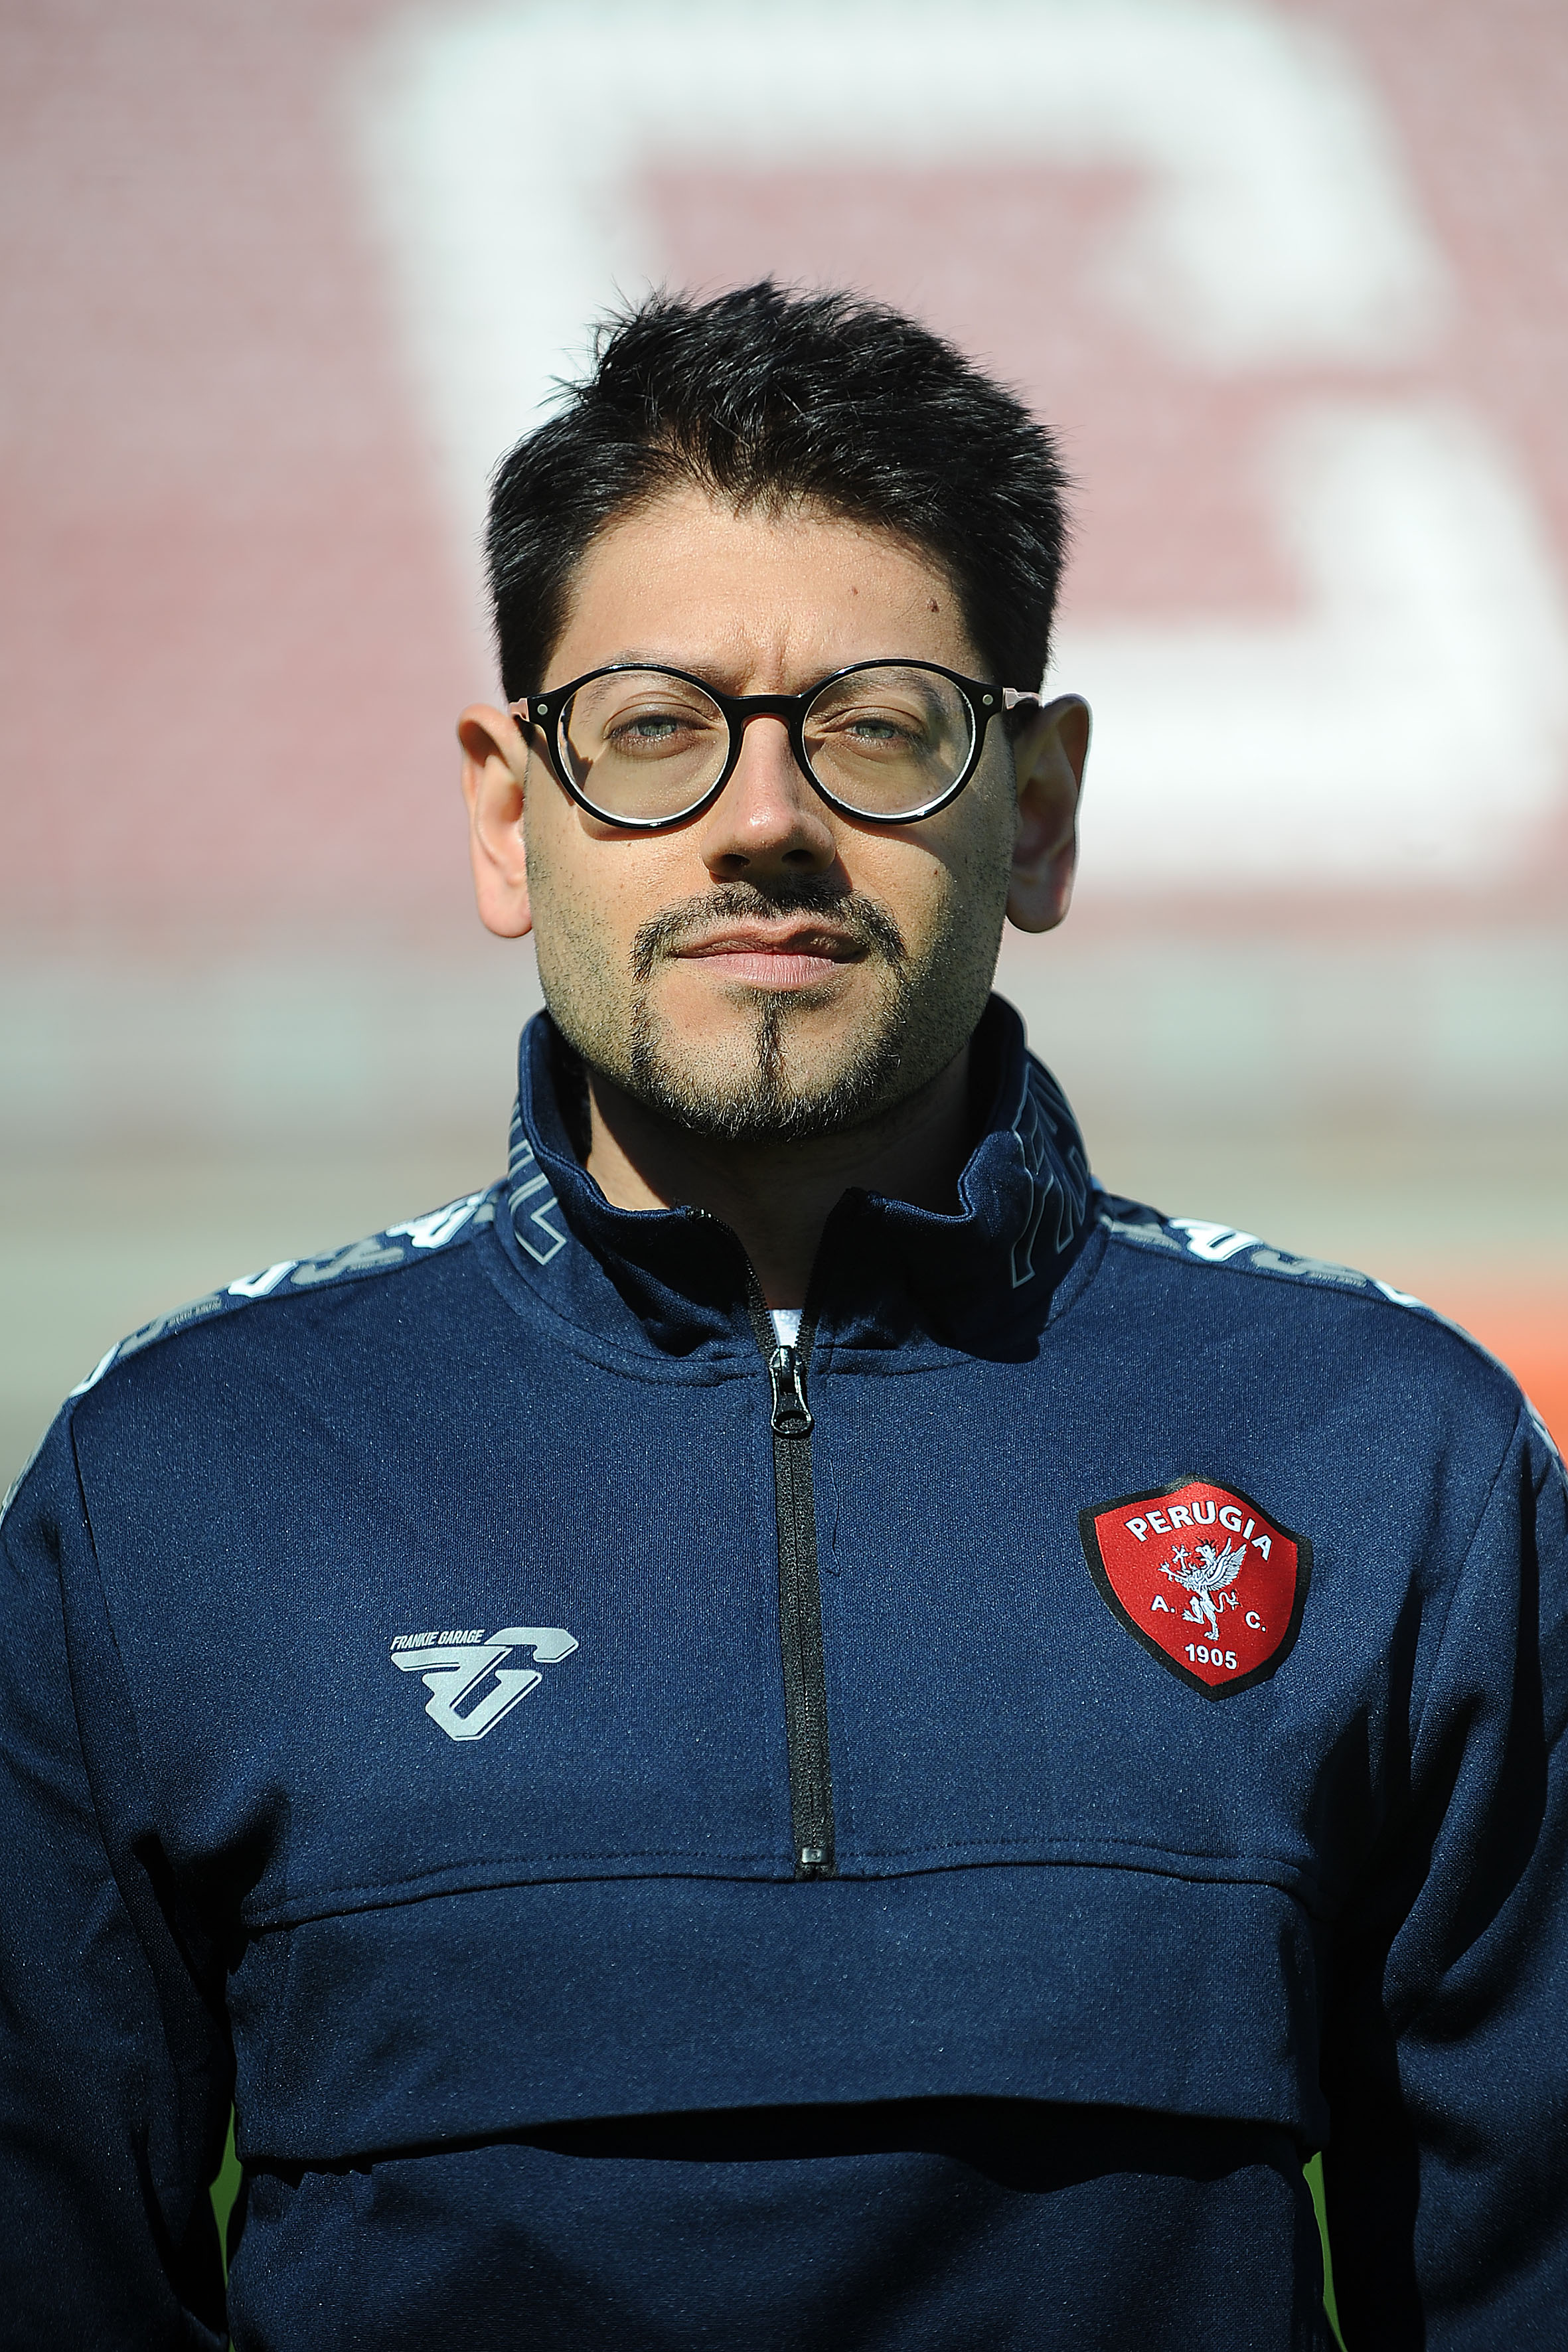 Carmine De Napoli - A.C. Perugia Calcio